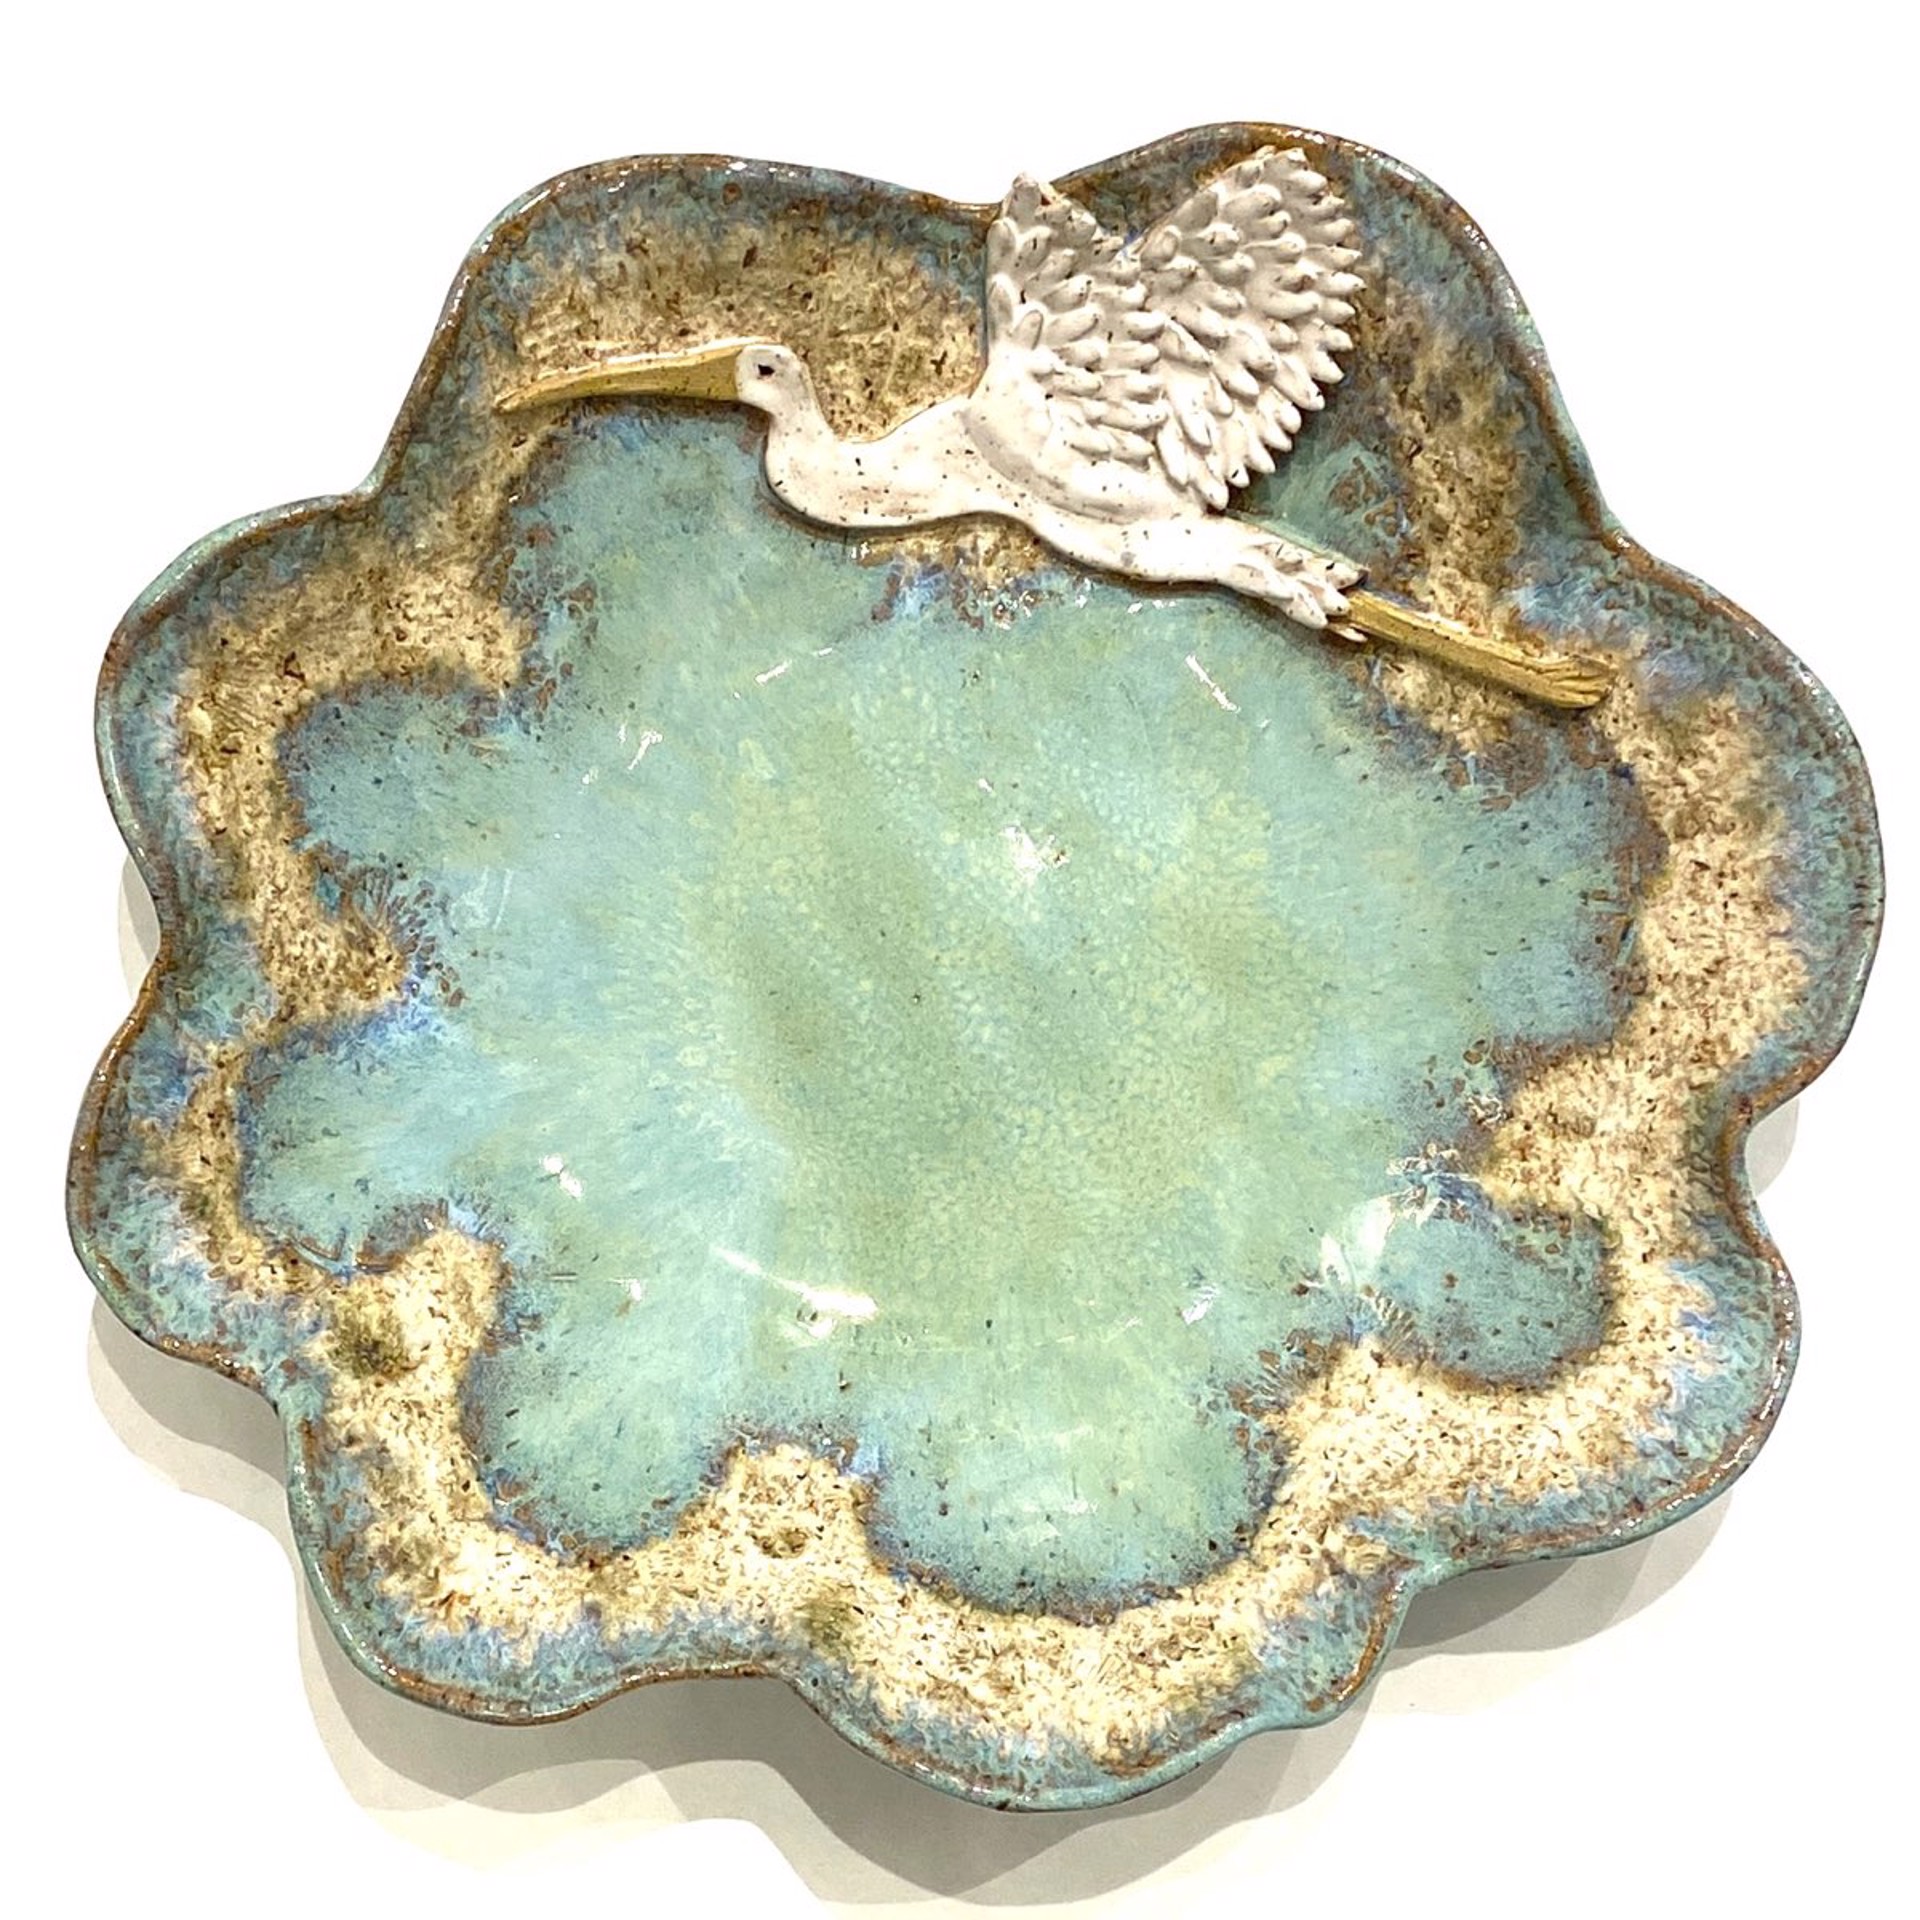 Heron Bowl (Green Glaze) LG23-1064 by Jim & Steffi Logan